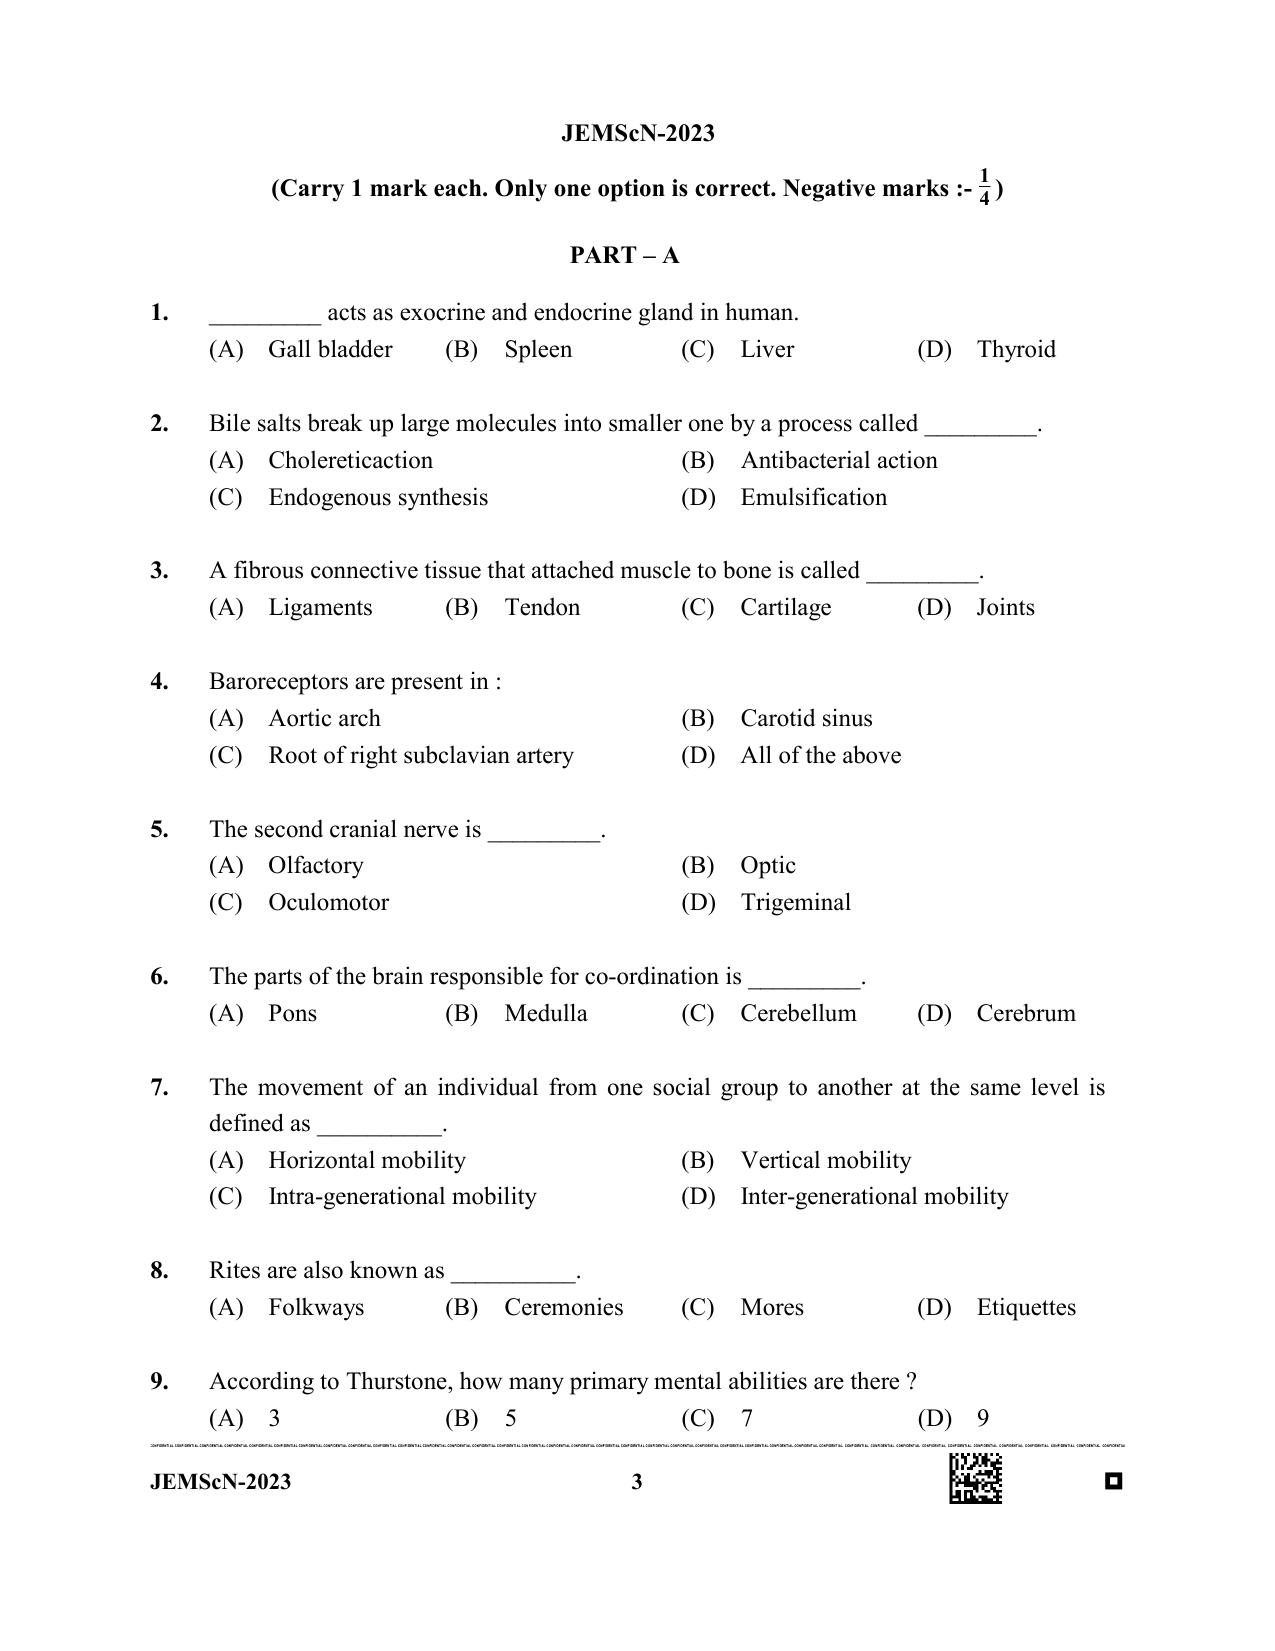 WB JEMScN 2023 Question Paper - Page 3